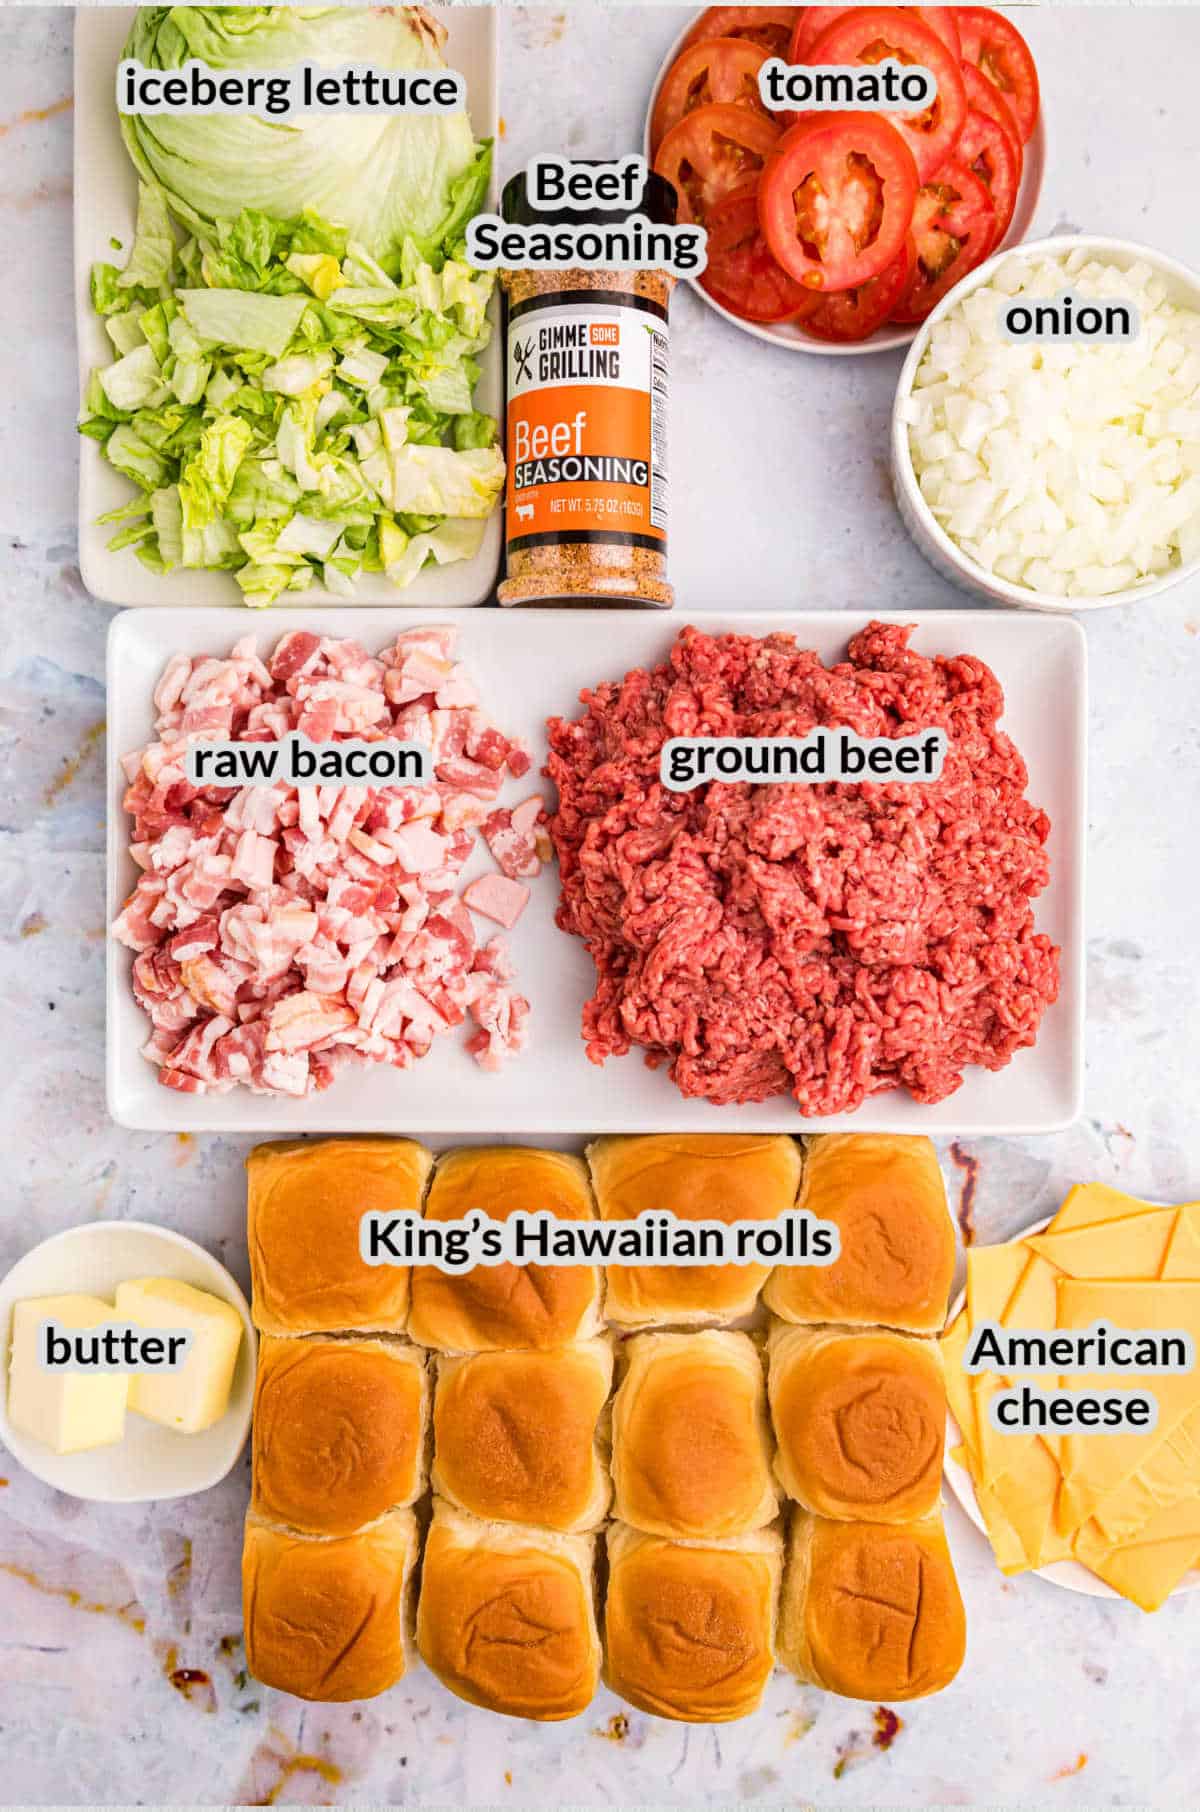 Overbead Image of Blackstone Smash Burger Sliders Ingredients